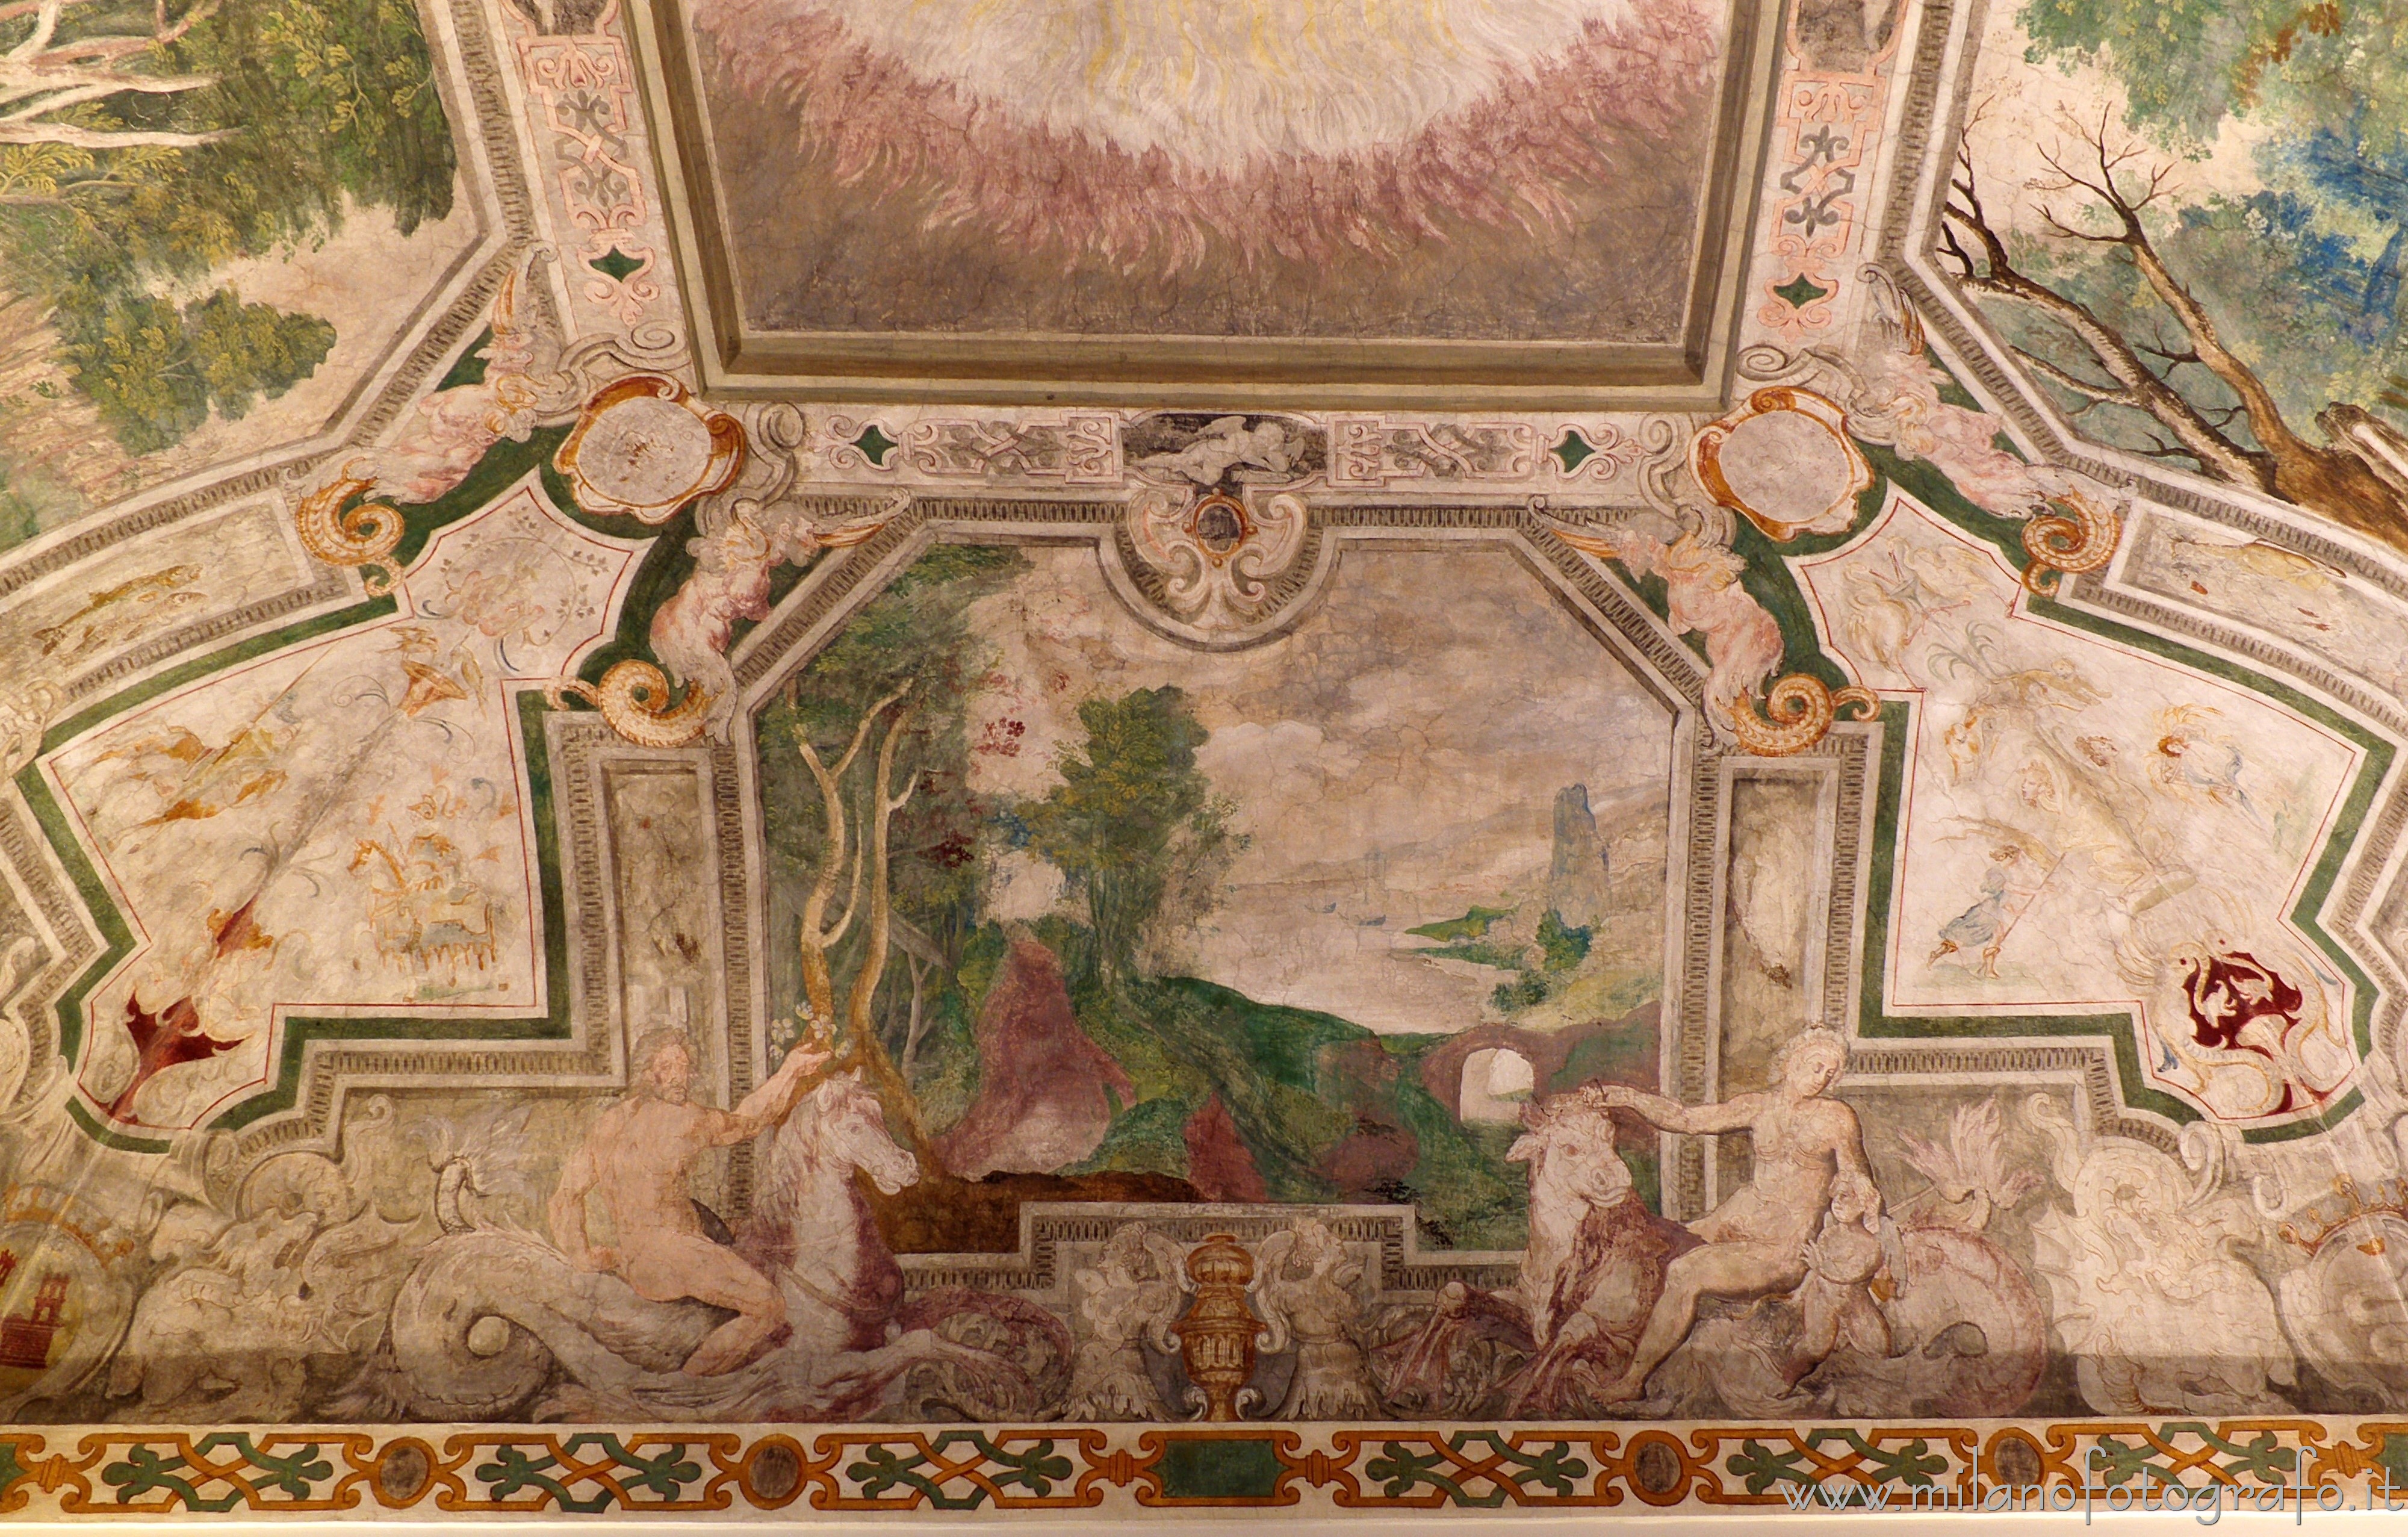 Cavenago di Brianza (Monza e Brianza, Italy): Detail of the frescoed vault of the Jupiter Hall in Palace Rasini - Cavenago di Brianza (Monza e Brianza, Italy)